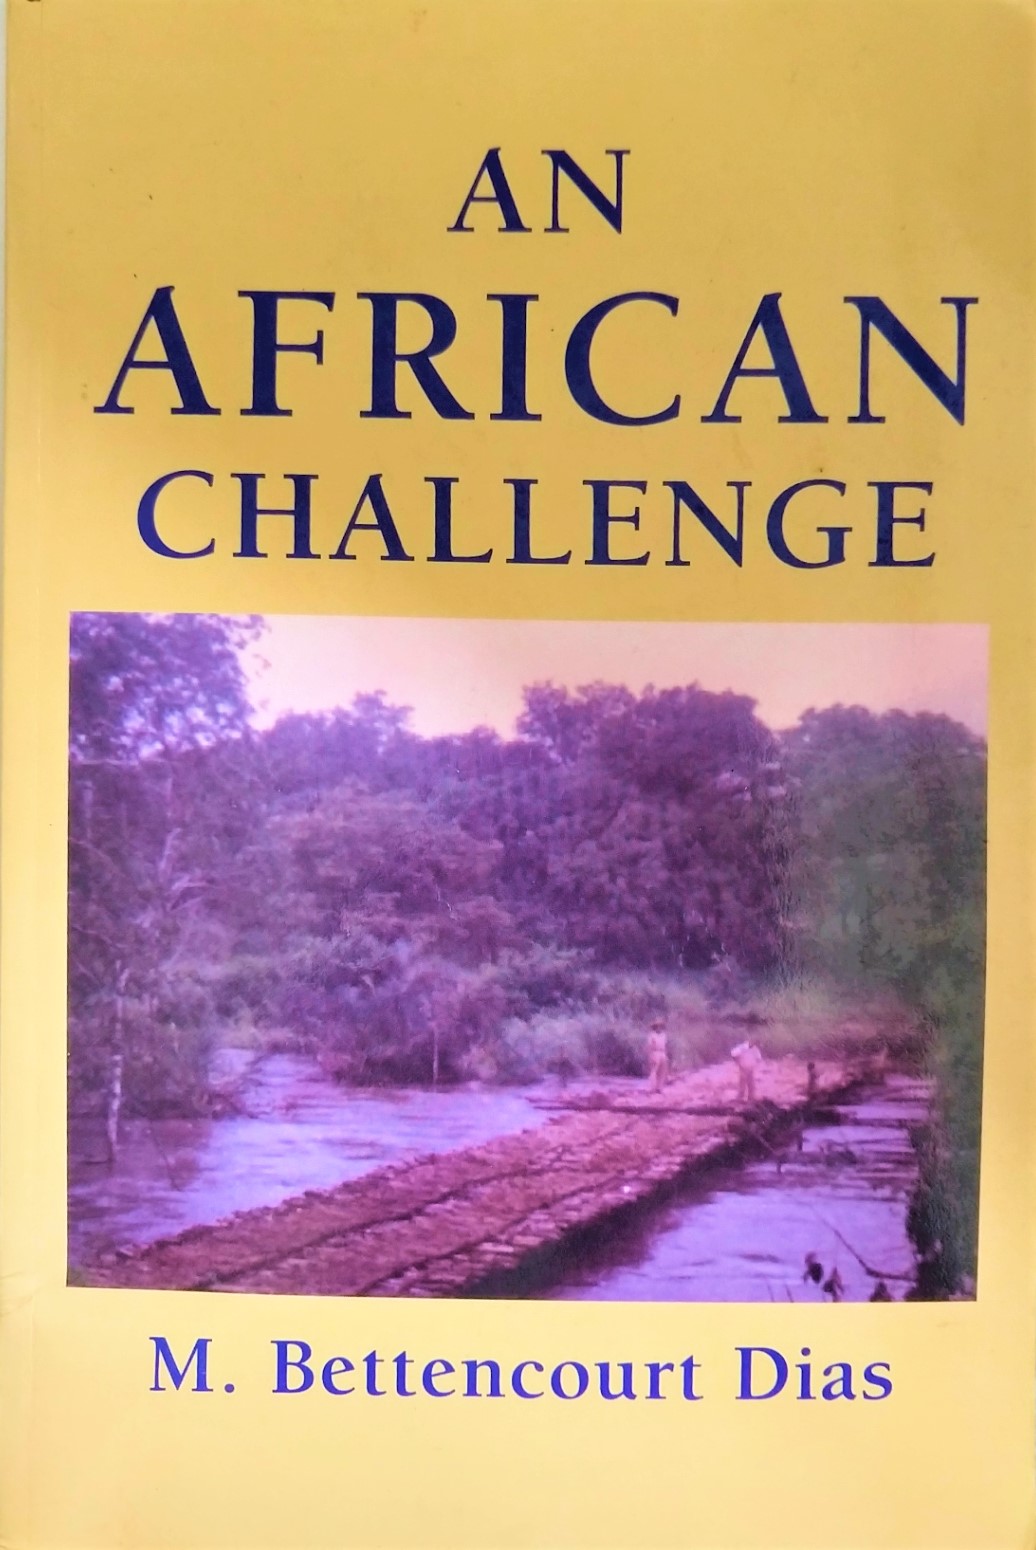 An African Challenge - M. Bettencourt Dias